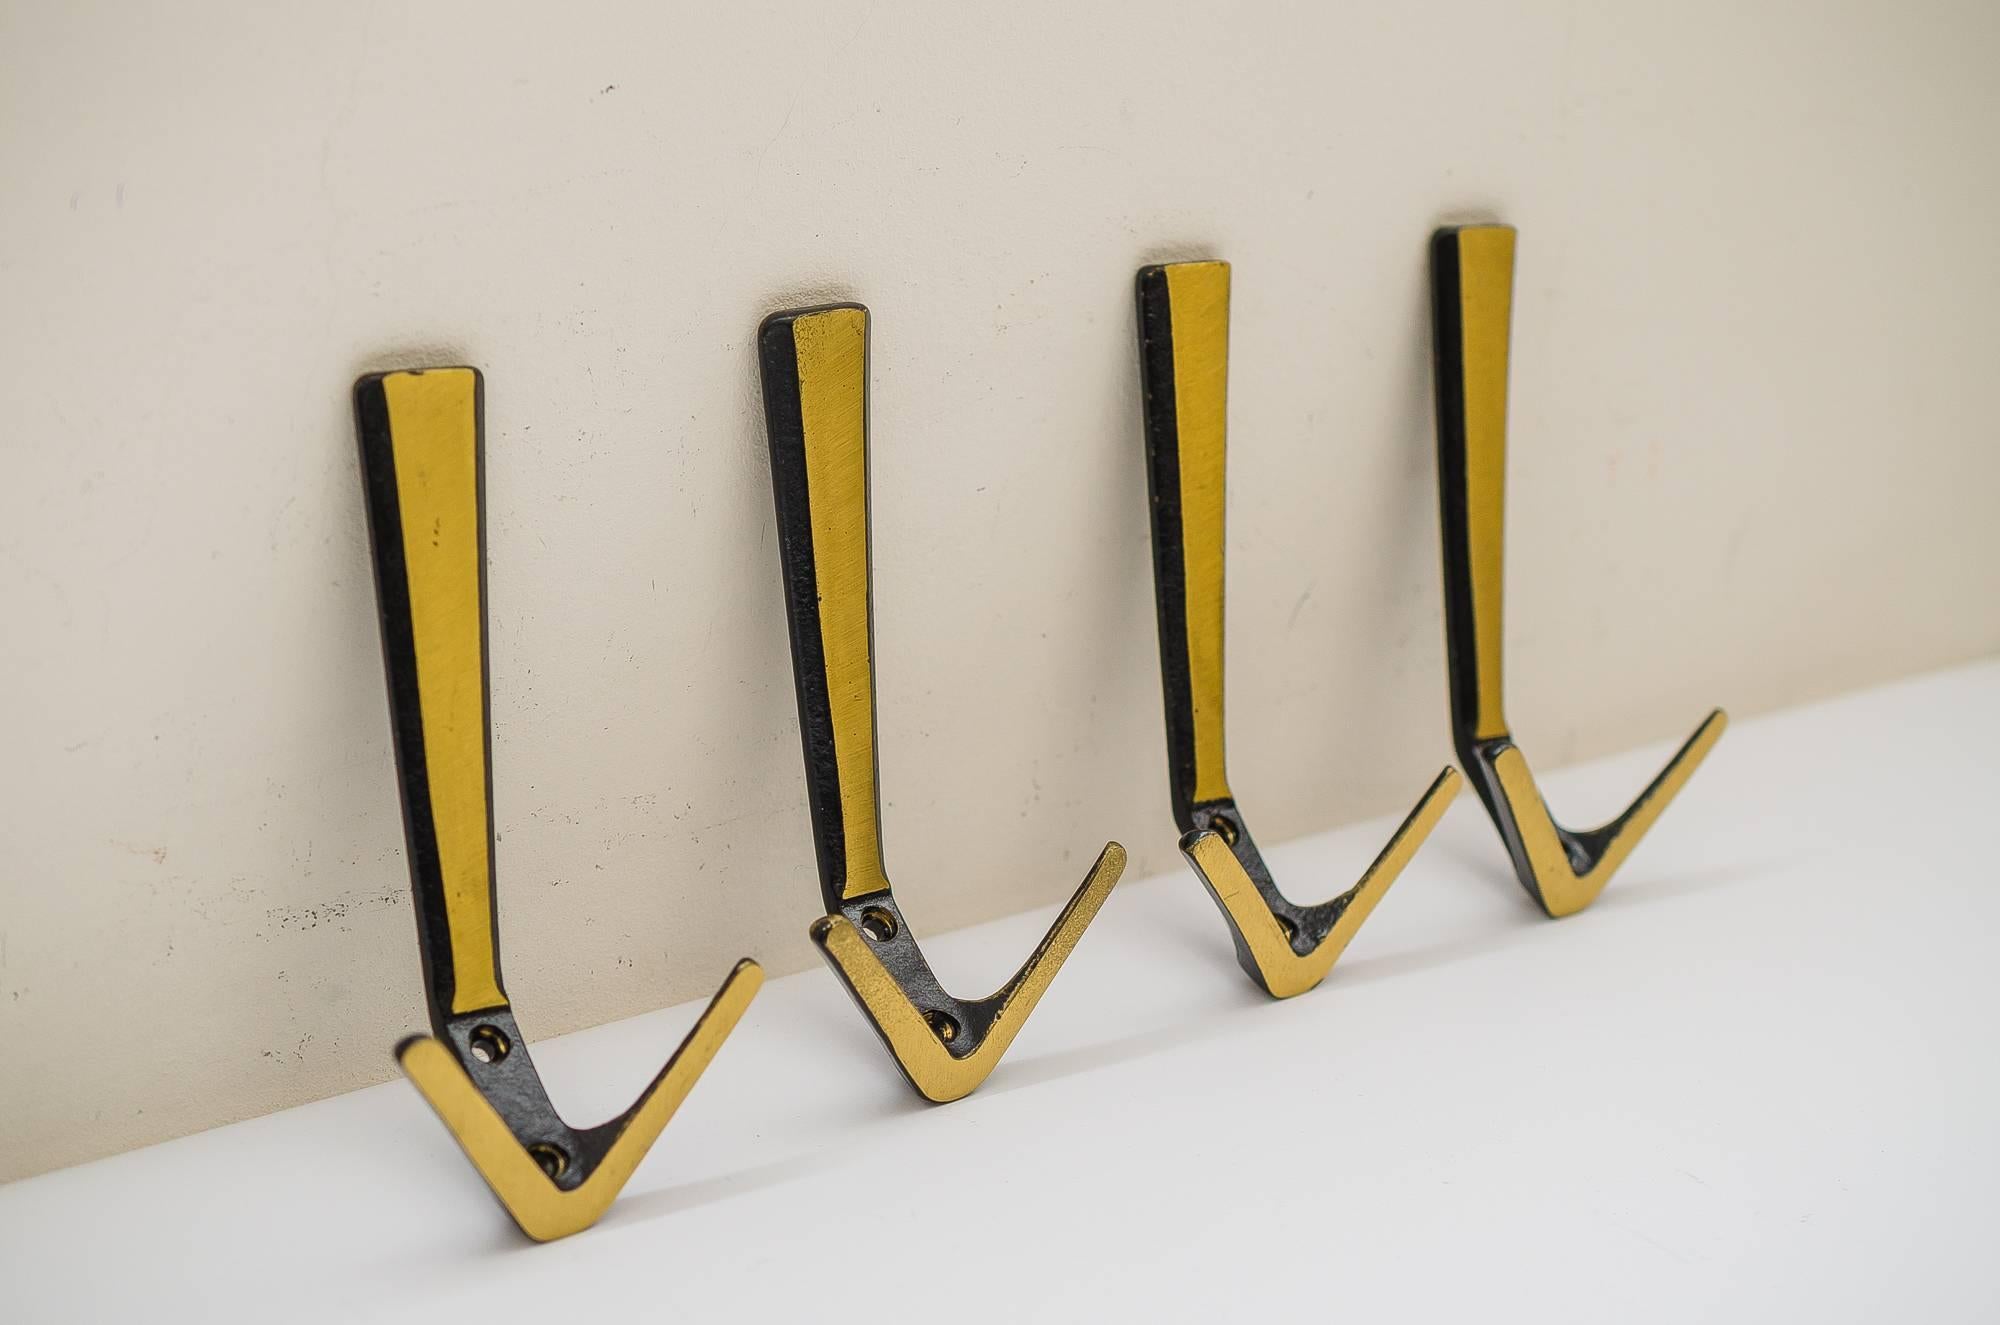 Four wall hooks by Hertha Baller
Original condition.